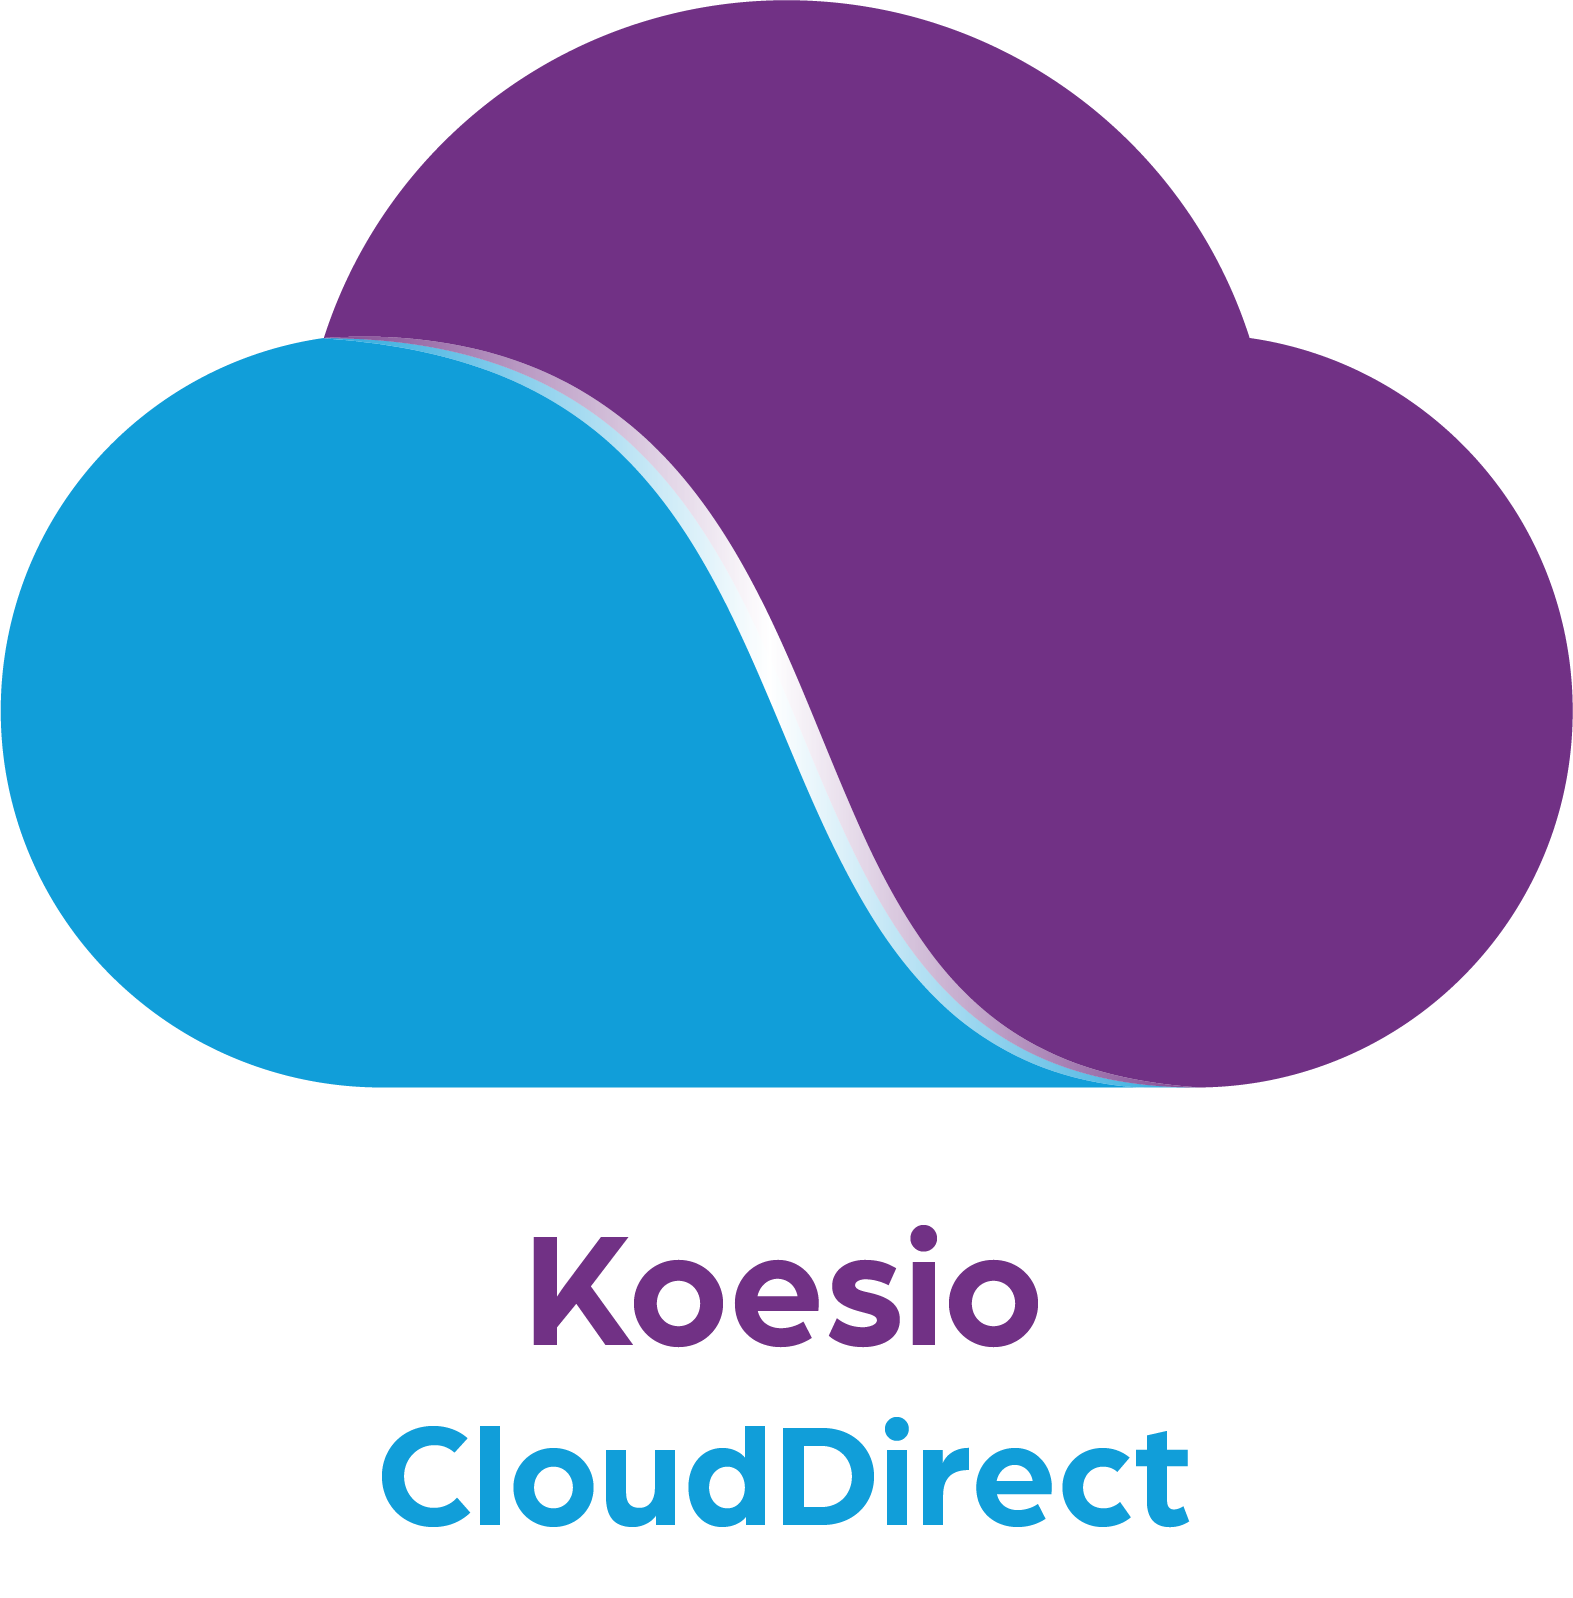 Icone Koesio CloudDirect